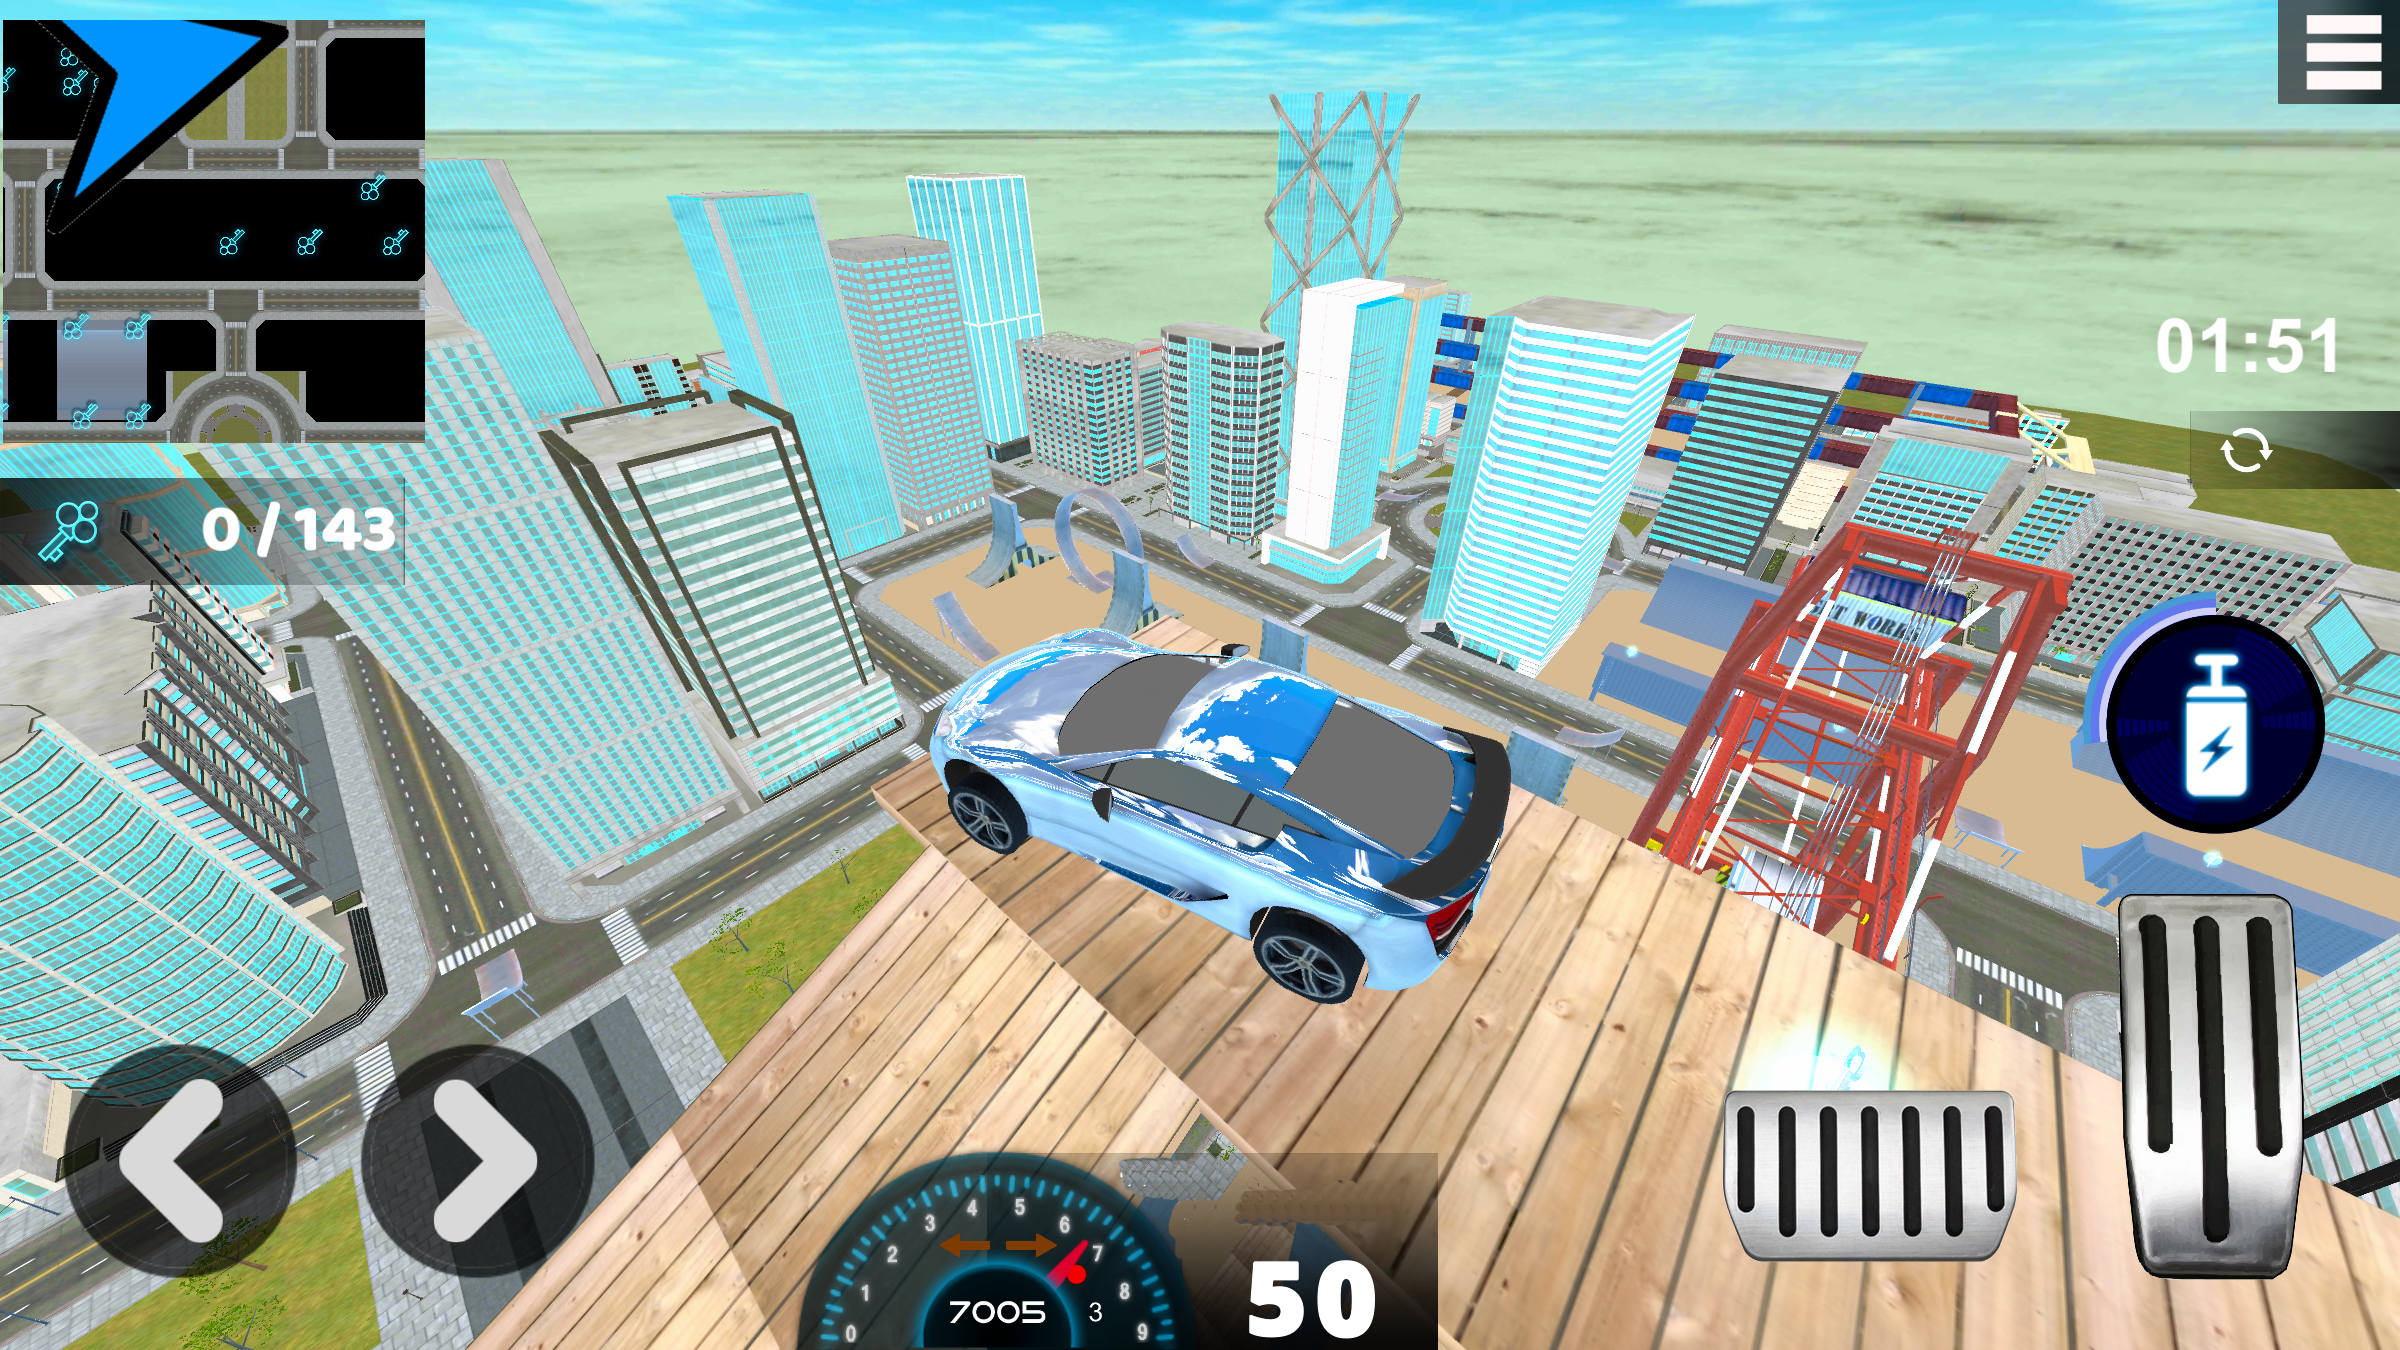 Real Cars in City - Jogar jogo Real Cars in City [FRIV JOGOS ONLINE]